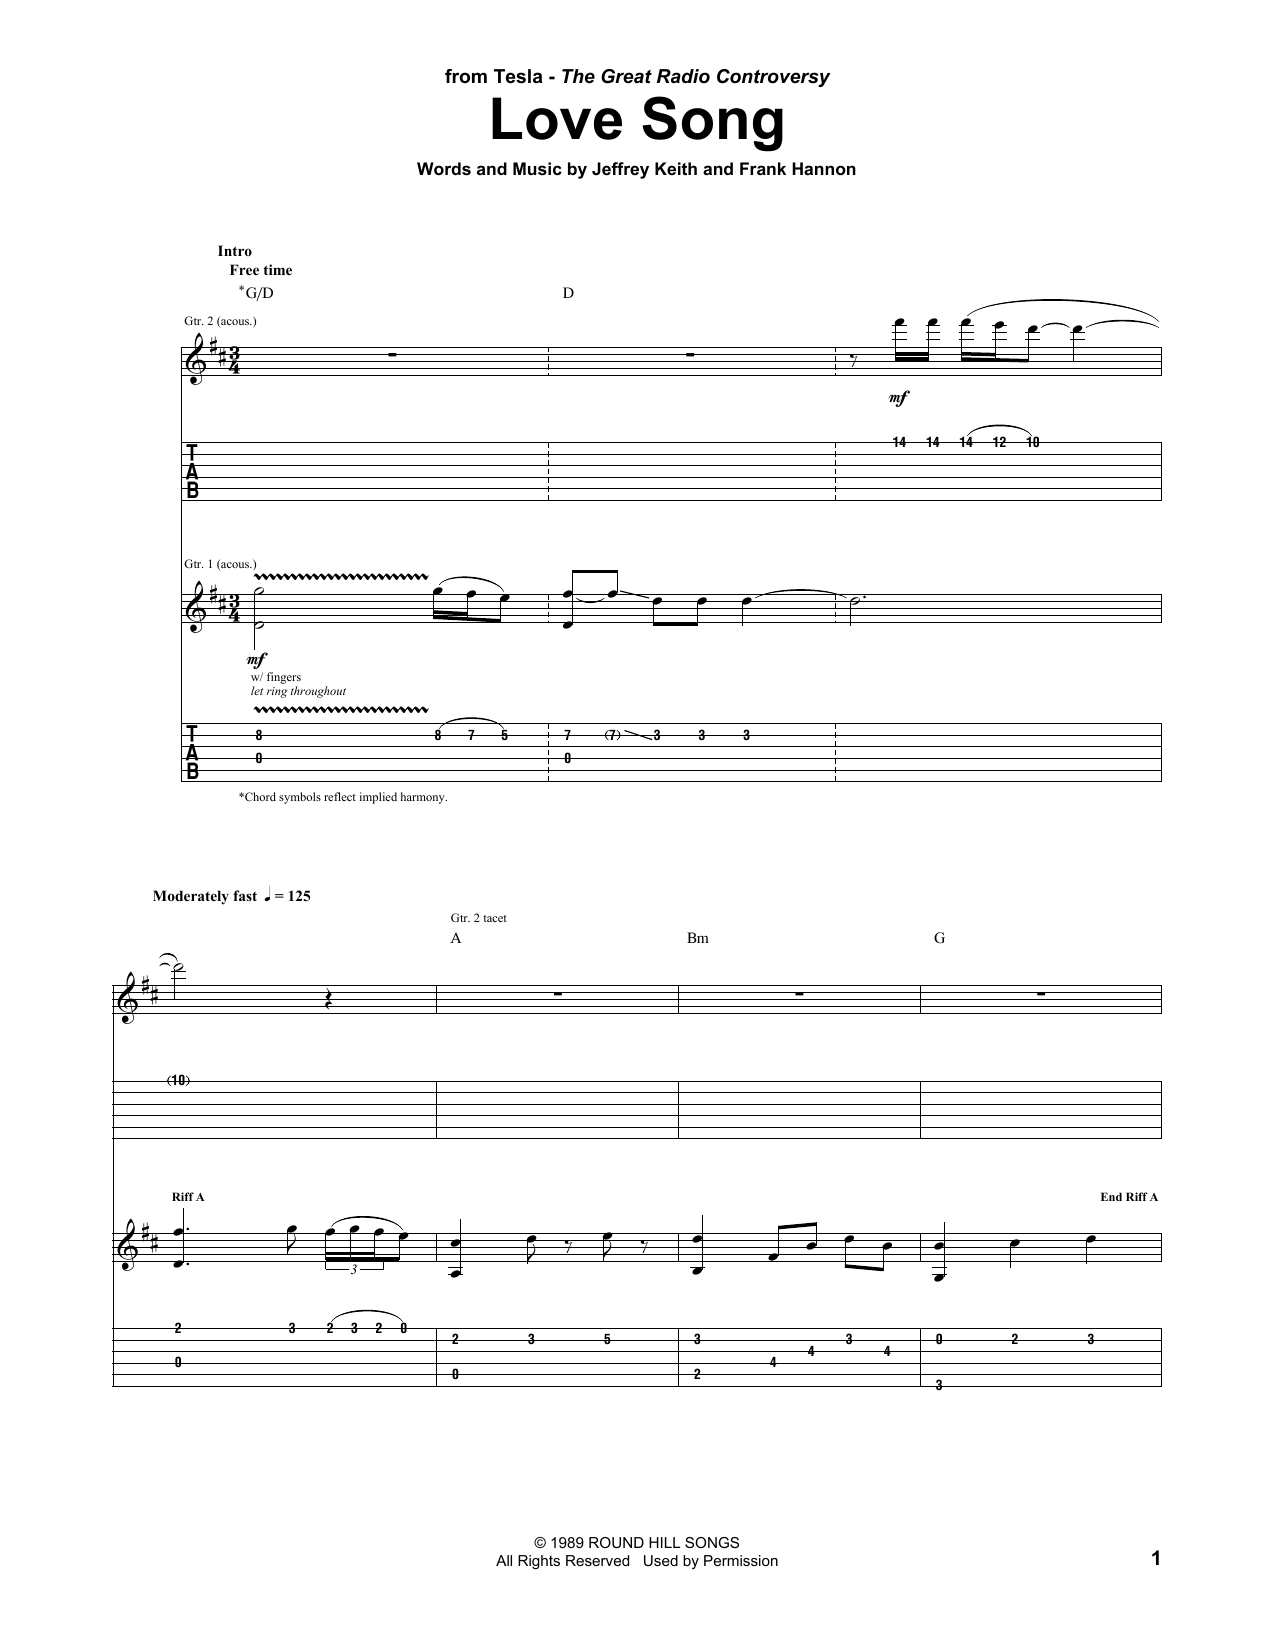 Tesla Love Song Sheet Music Notes & Chords for Guitar Tab - Download or Print PDF